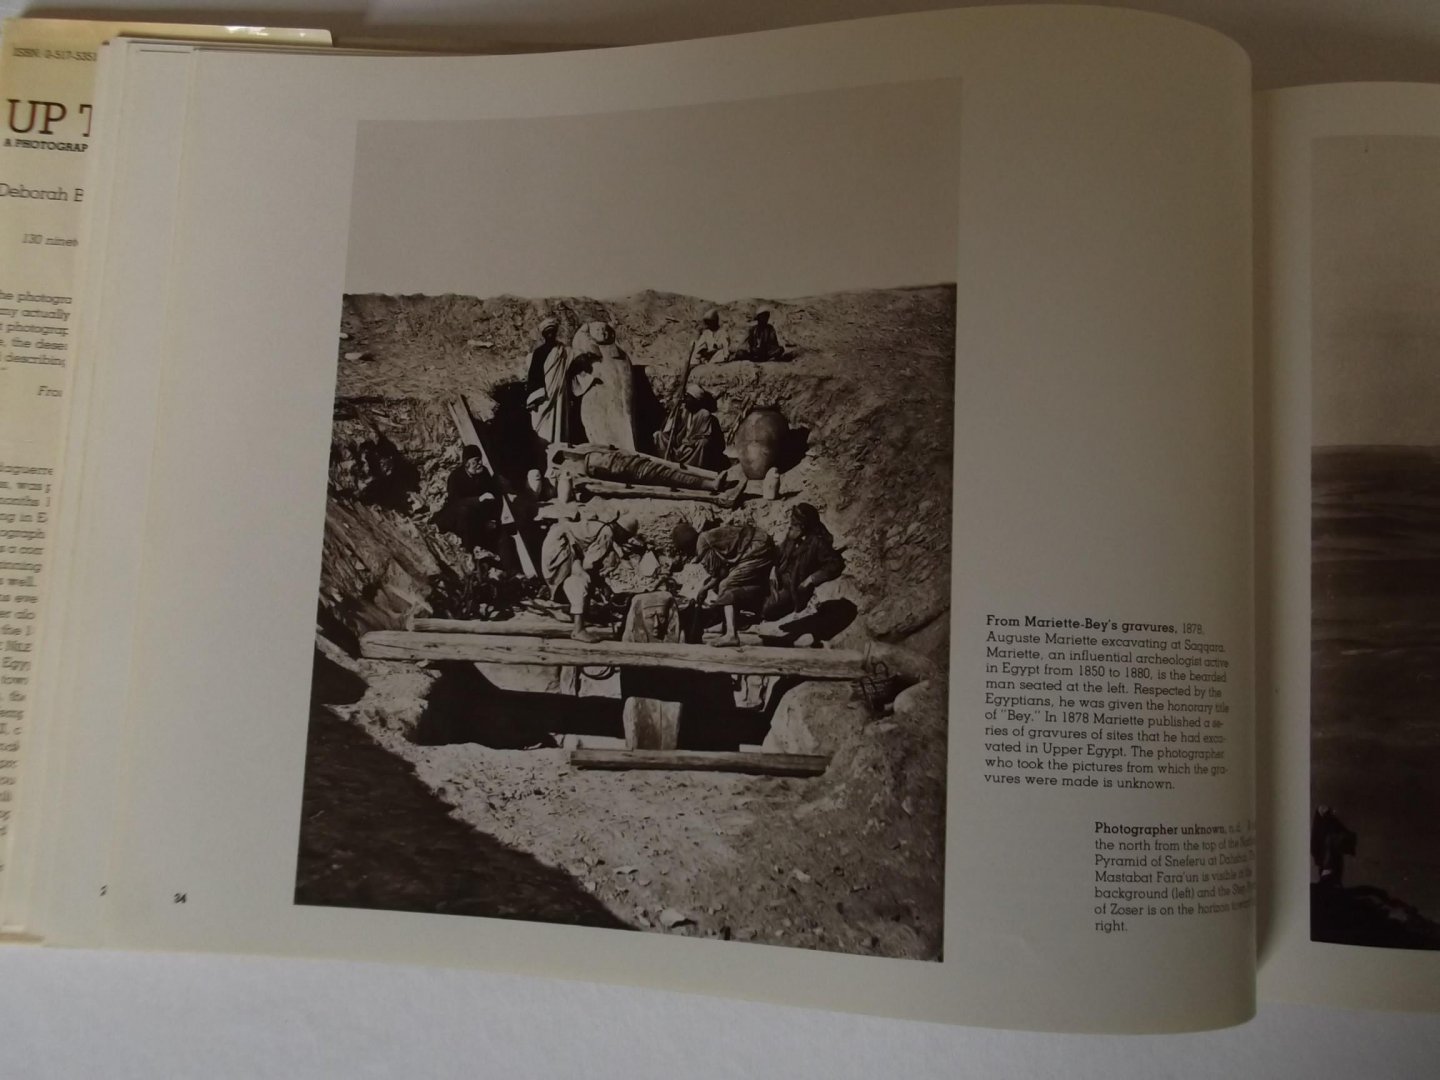 BULL,D.& LORIMER,D. - Up the Nile  A photographic excursion: Egypt 1839-1898